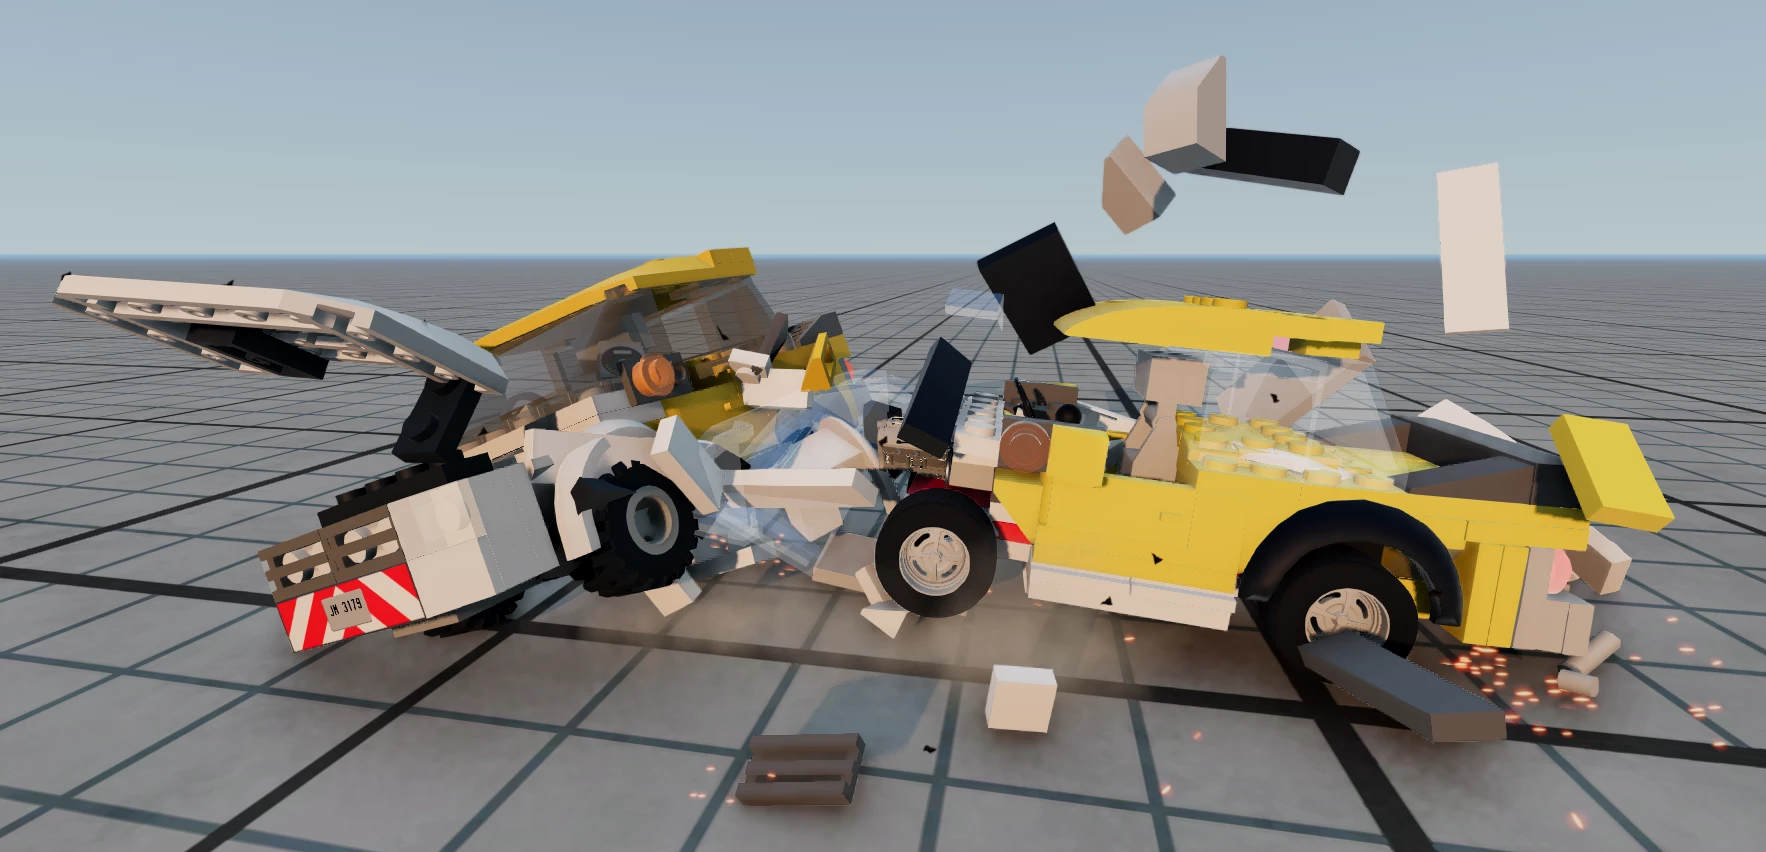 BATIDA DE CARRO LEGO A 299KM/H // BEAMNG DRIVE #beamng